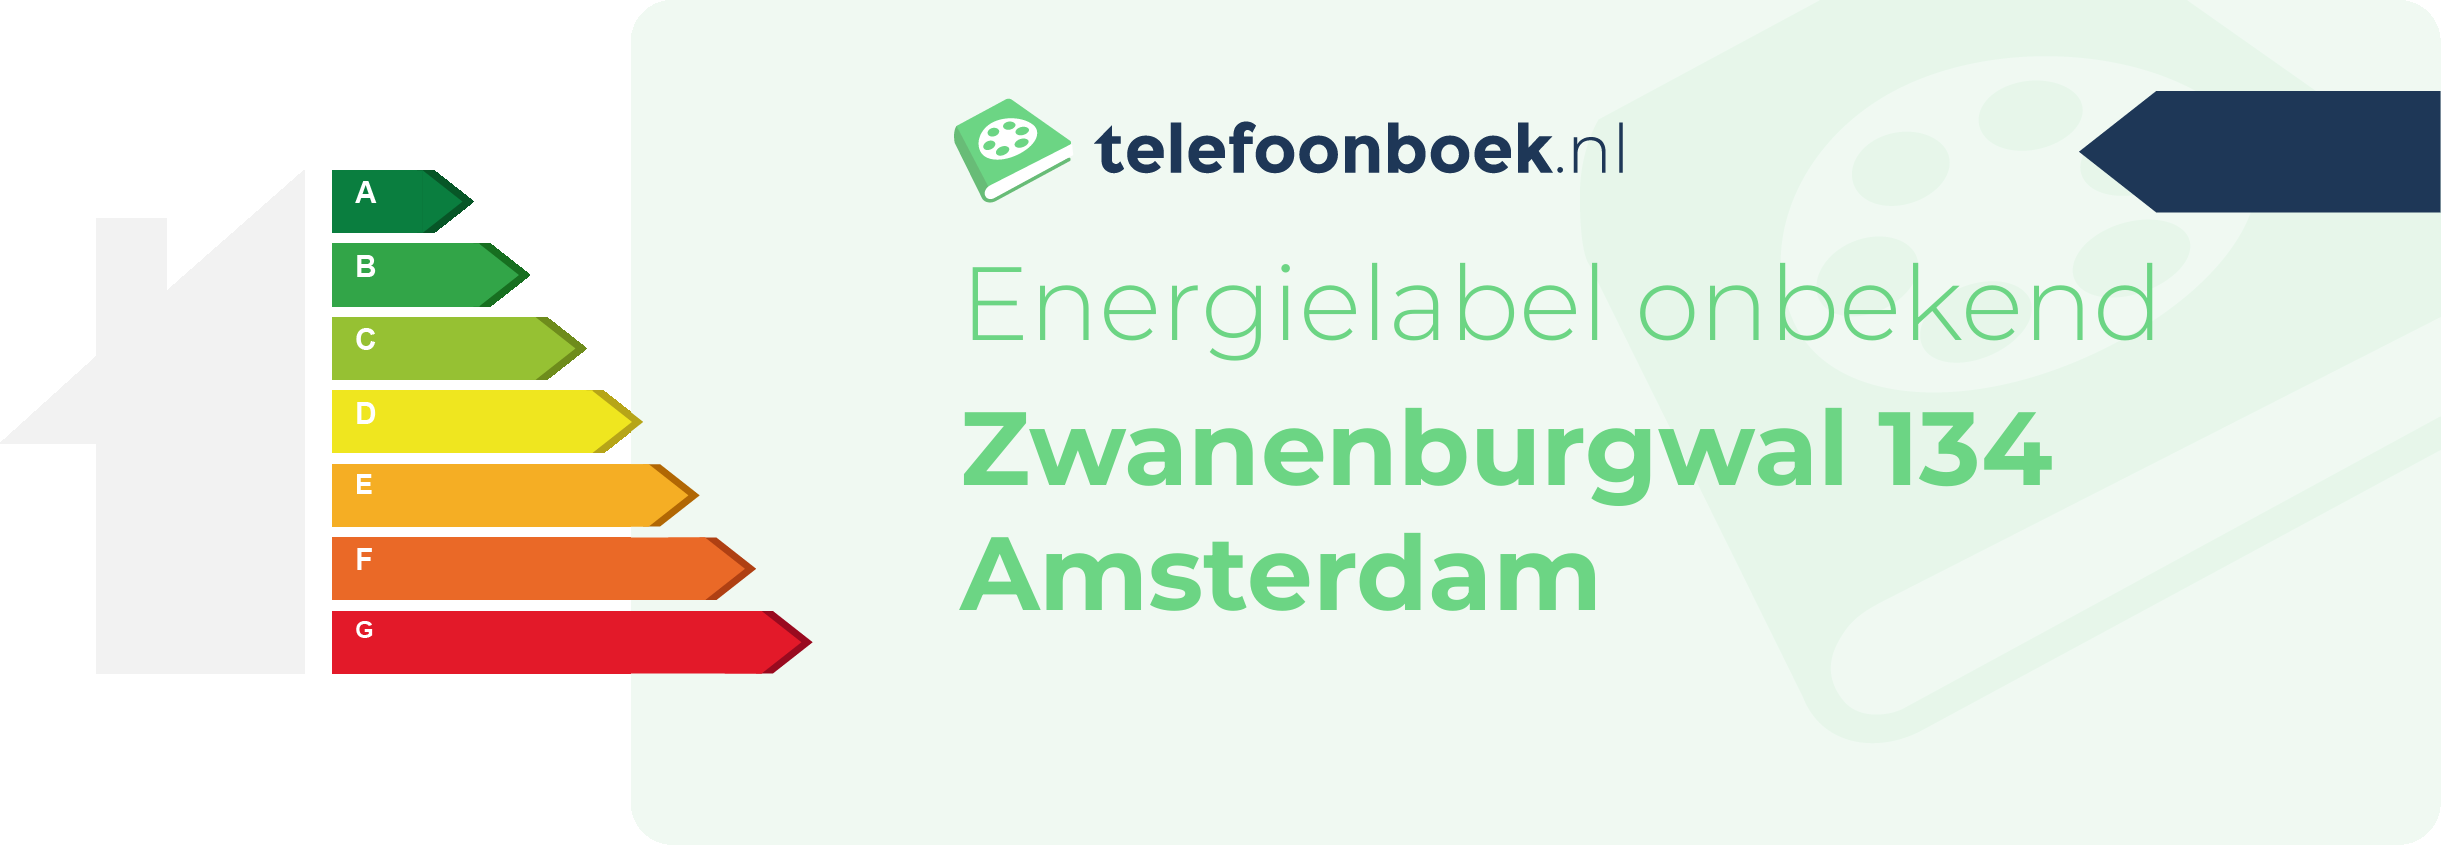 Energielabel Zwanenburgwal 134 Amsterdam